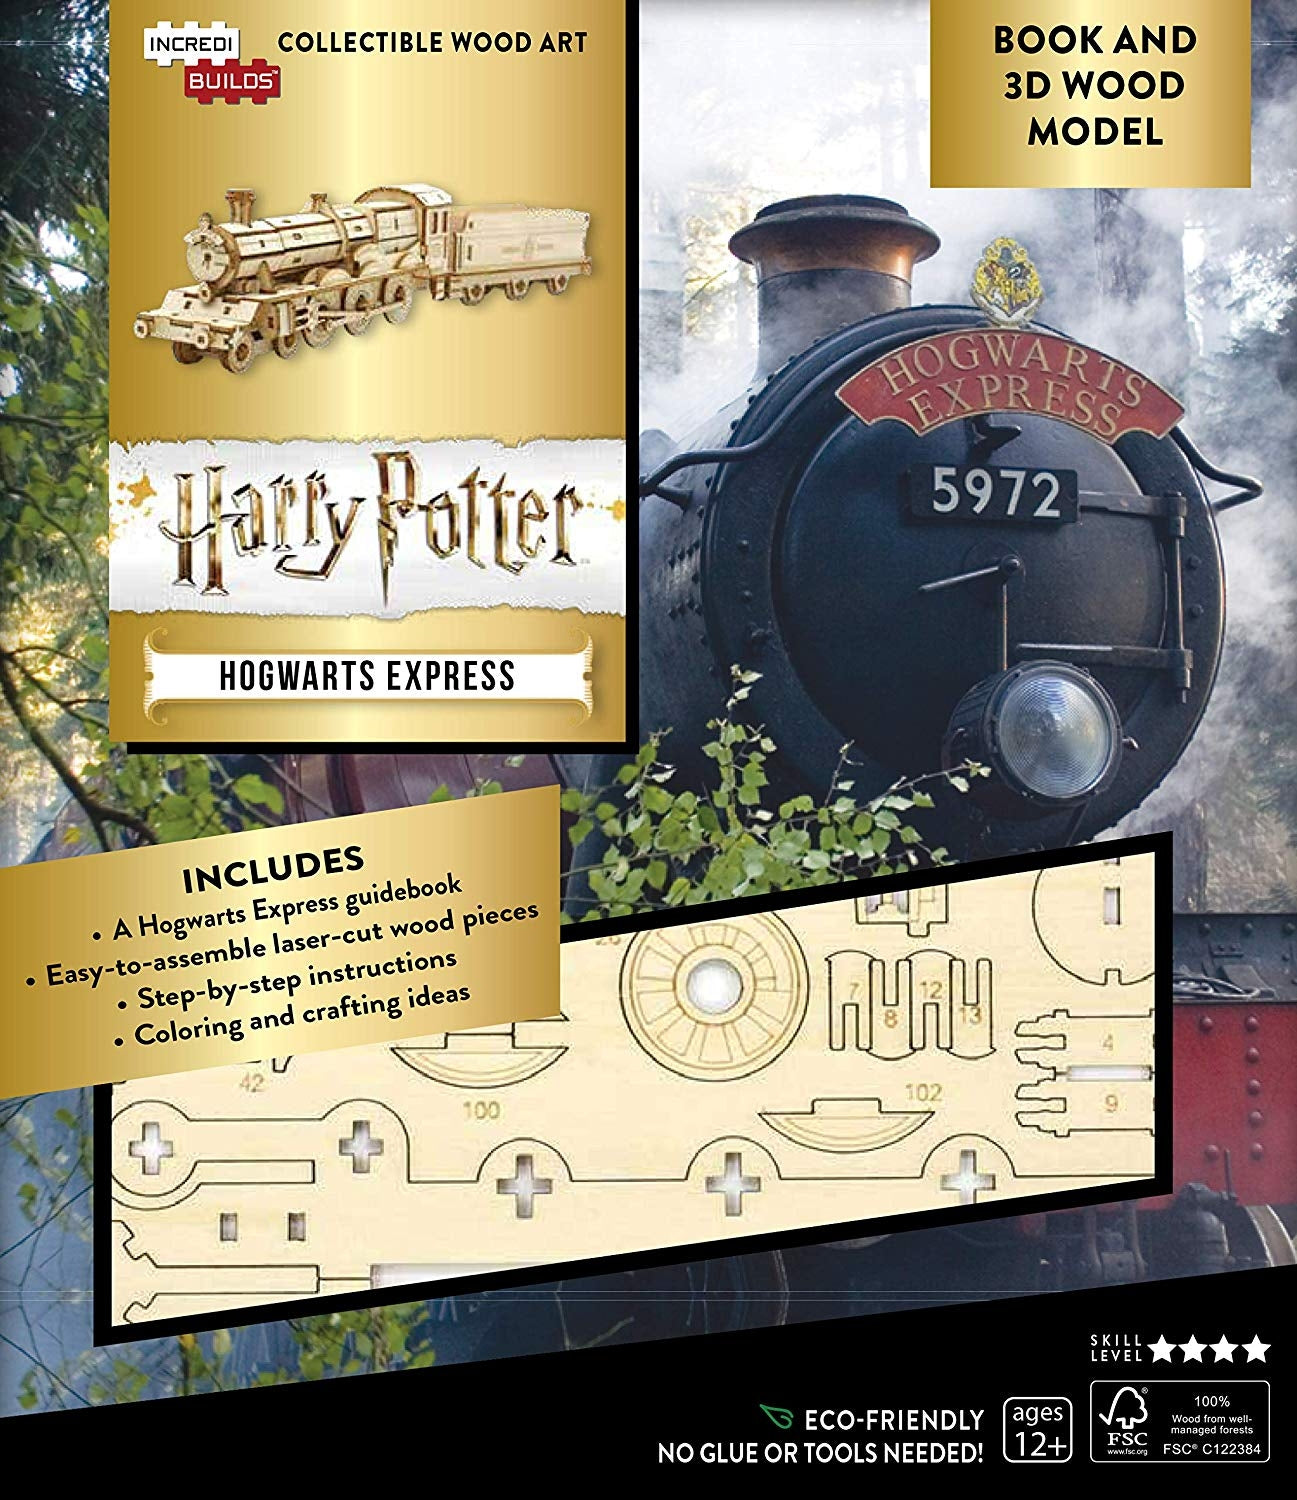 Hogwarts Express - Harry Potter - Incredibuilds 3D Wood Model and Book